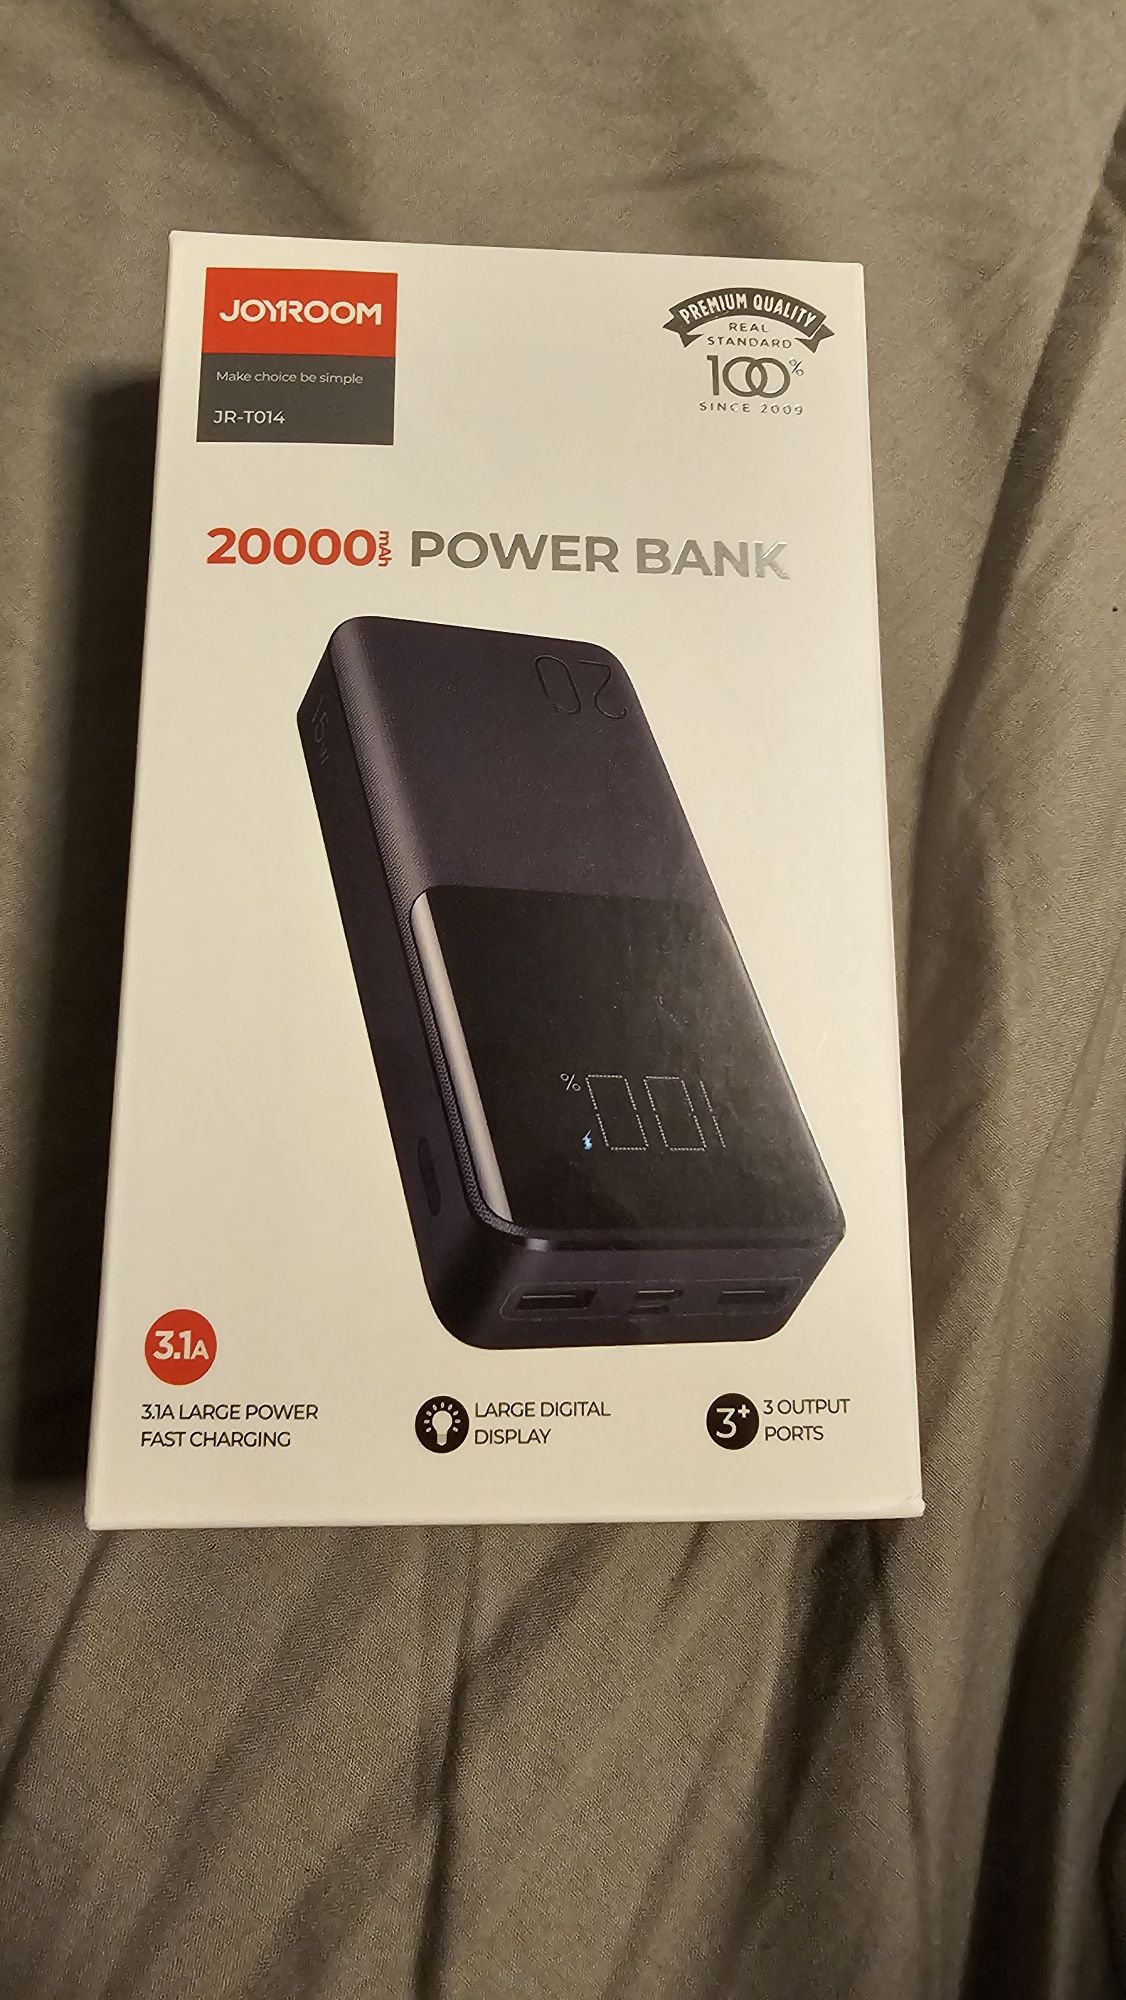 Power bank 20000